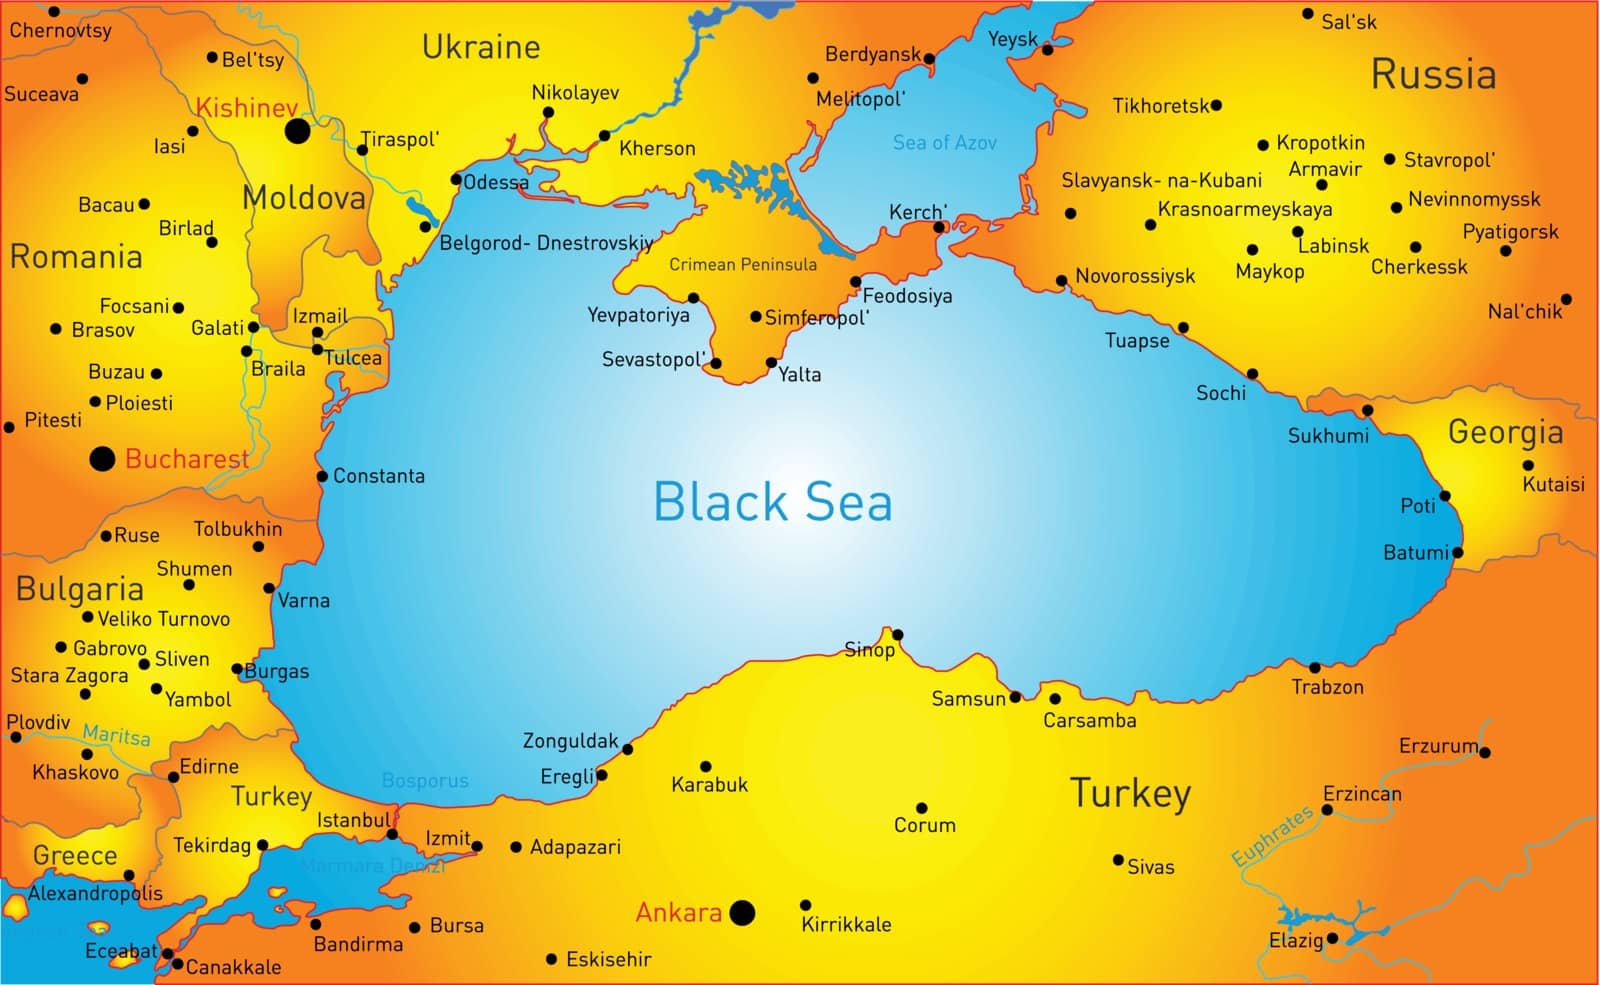 Black sea region by rusak